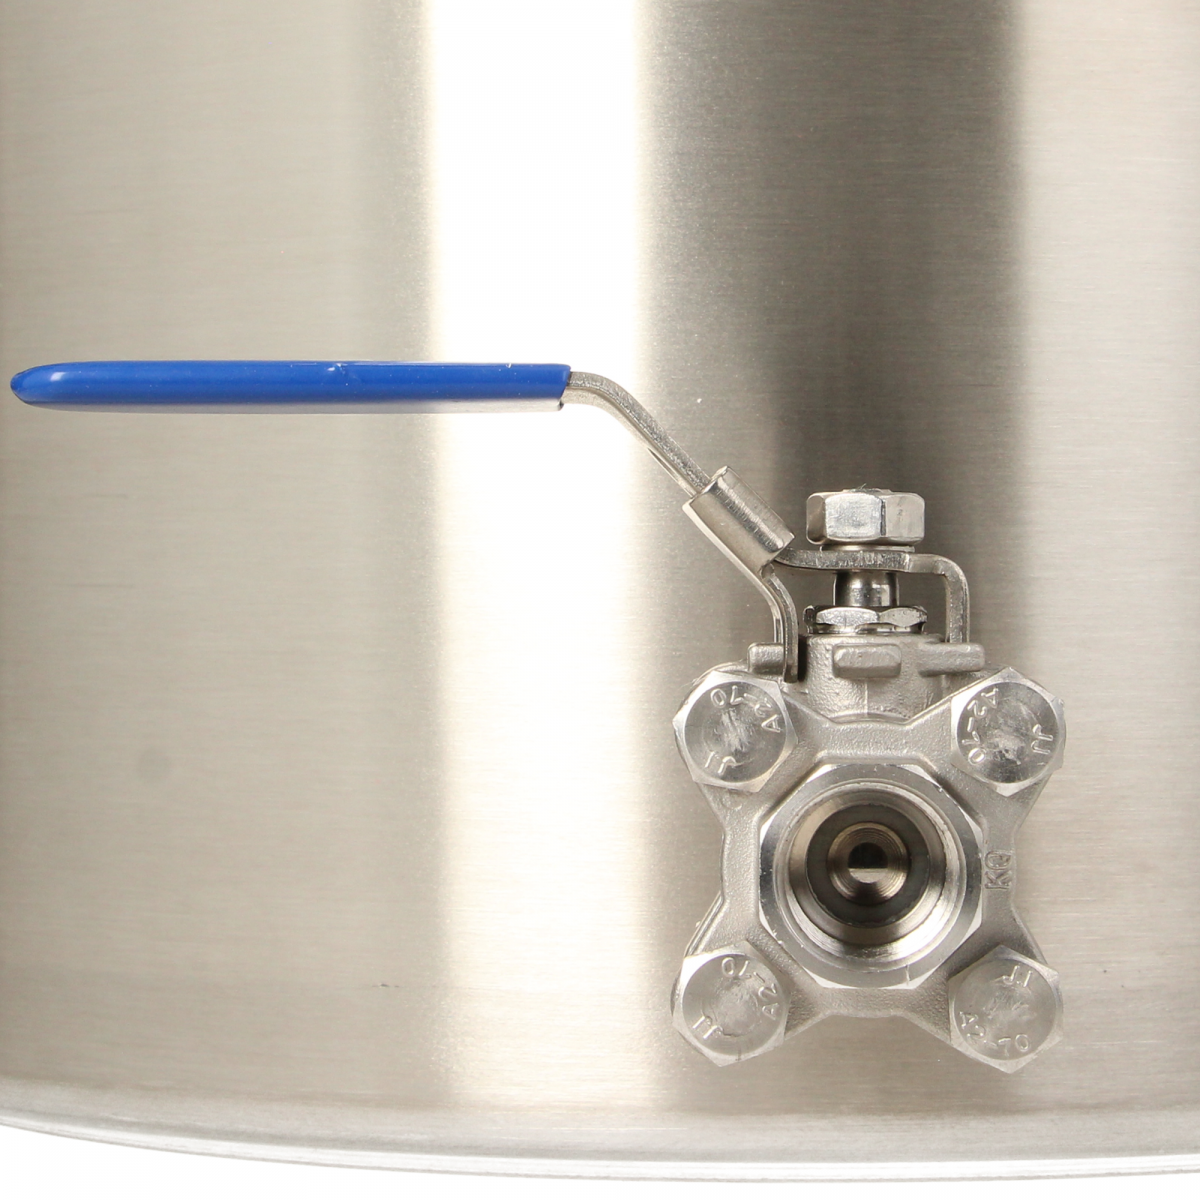 Brewferm homebrew kettle SST 35 l with ball valve (36 x 36 cm)